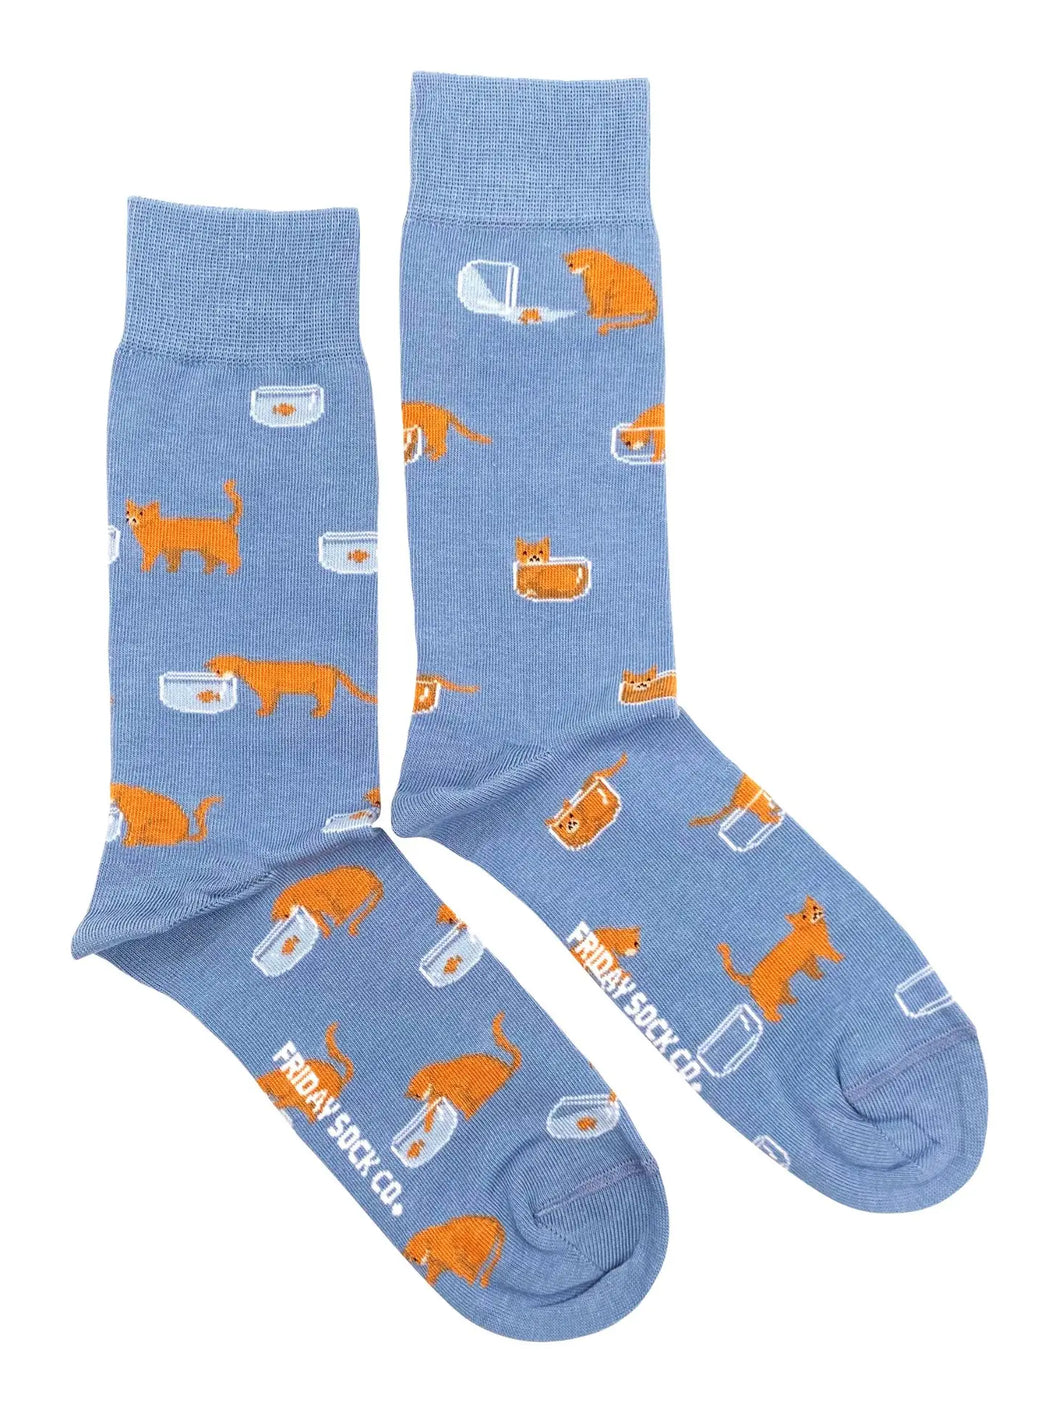 men's socks - cat & fish